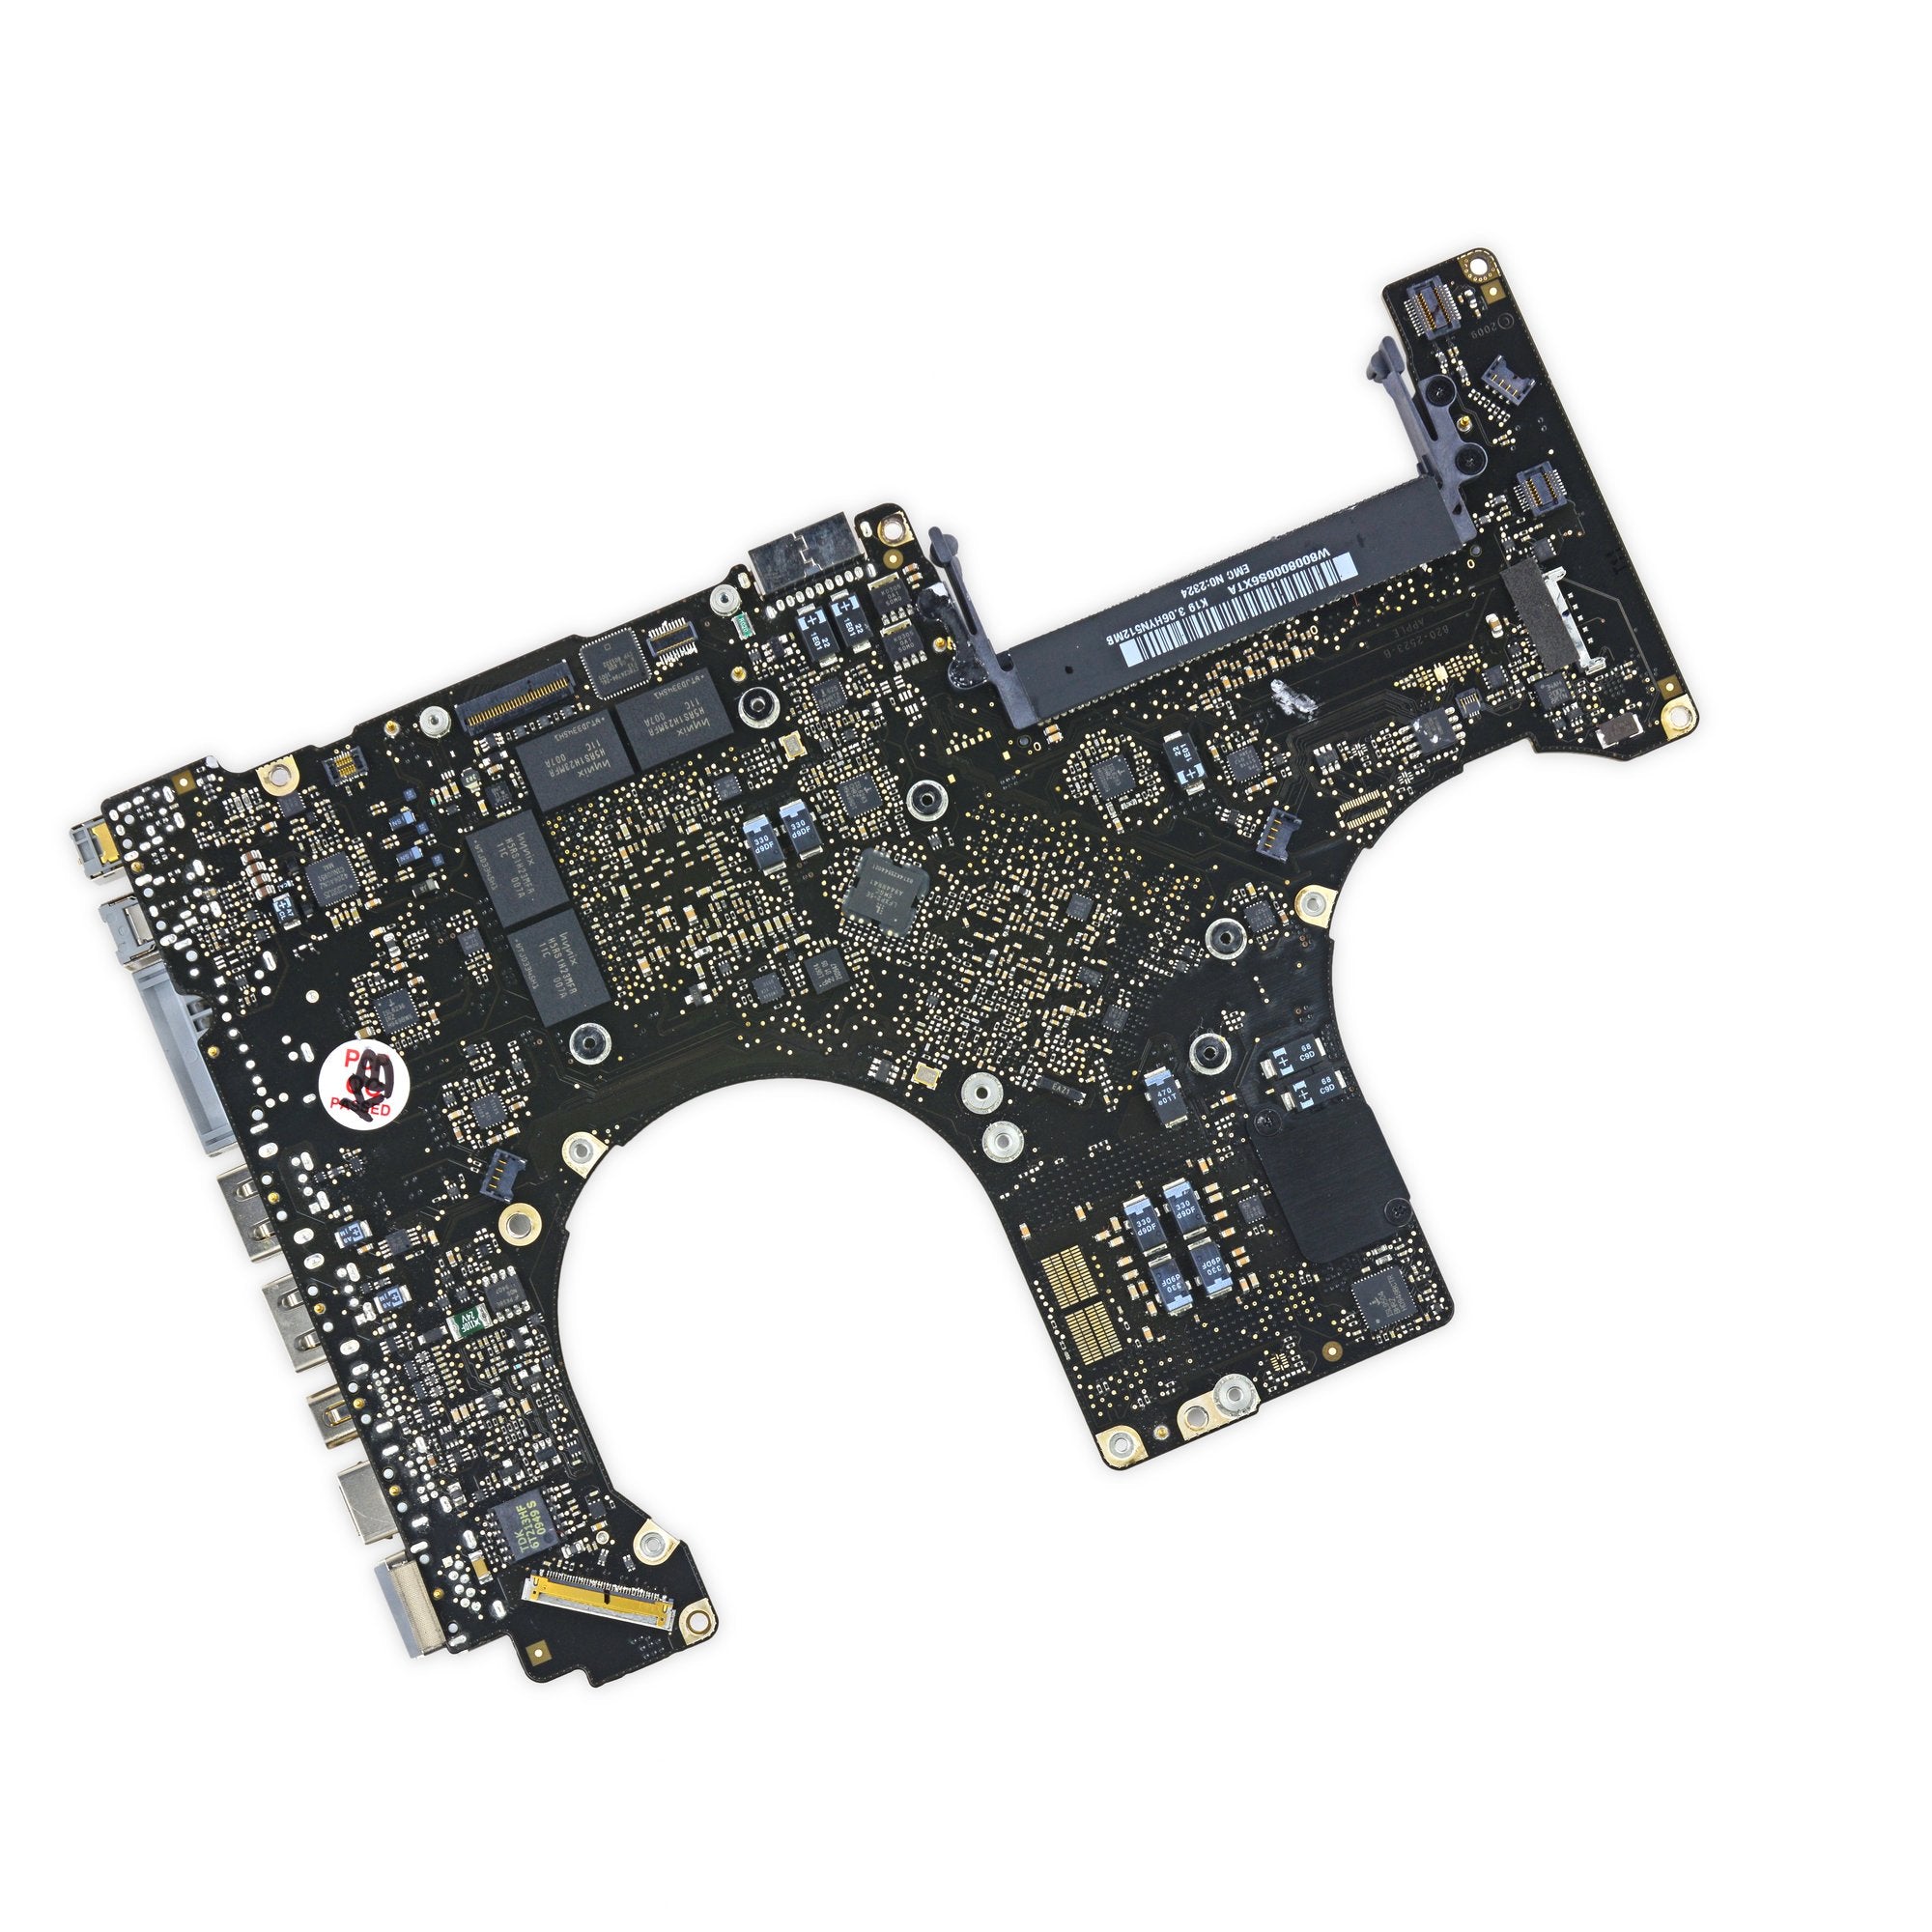 MacBook Pro 15" Unibody (Mid 2009) 3.06 GHz Logic Board